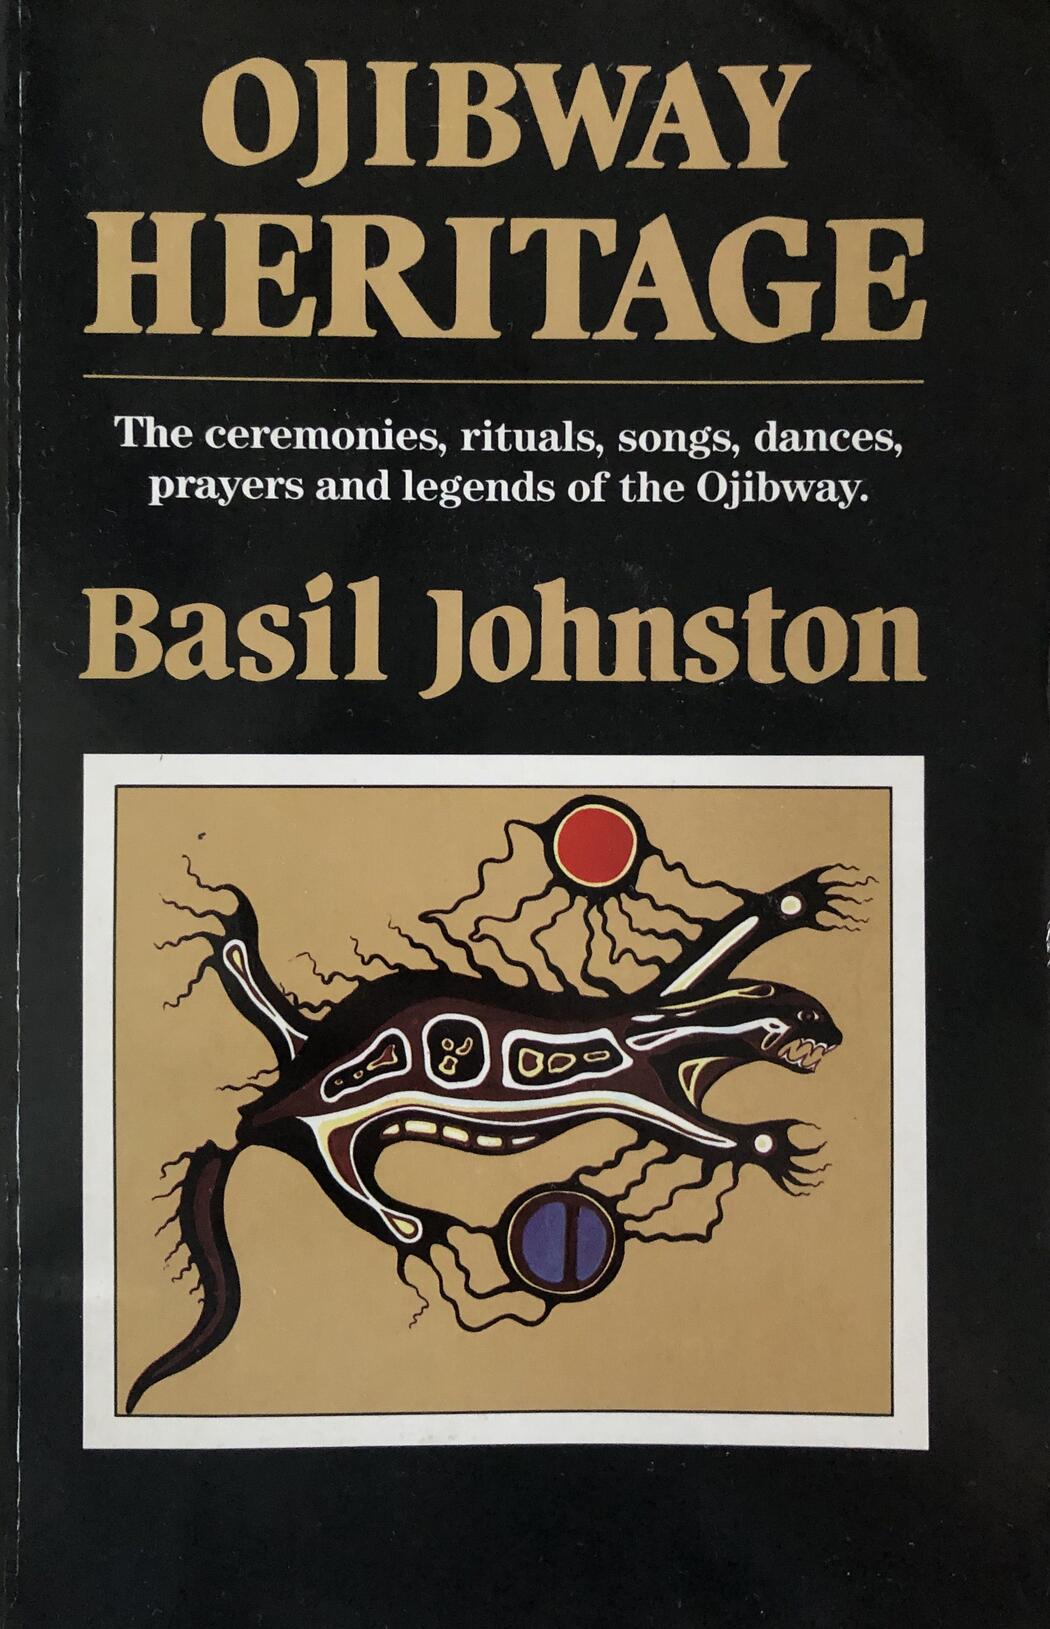 Ojibway Heritage by Basil Johnston